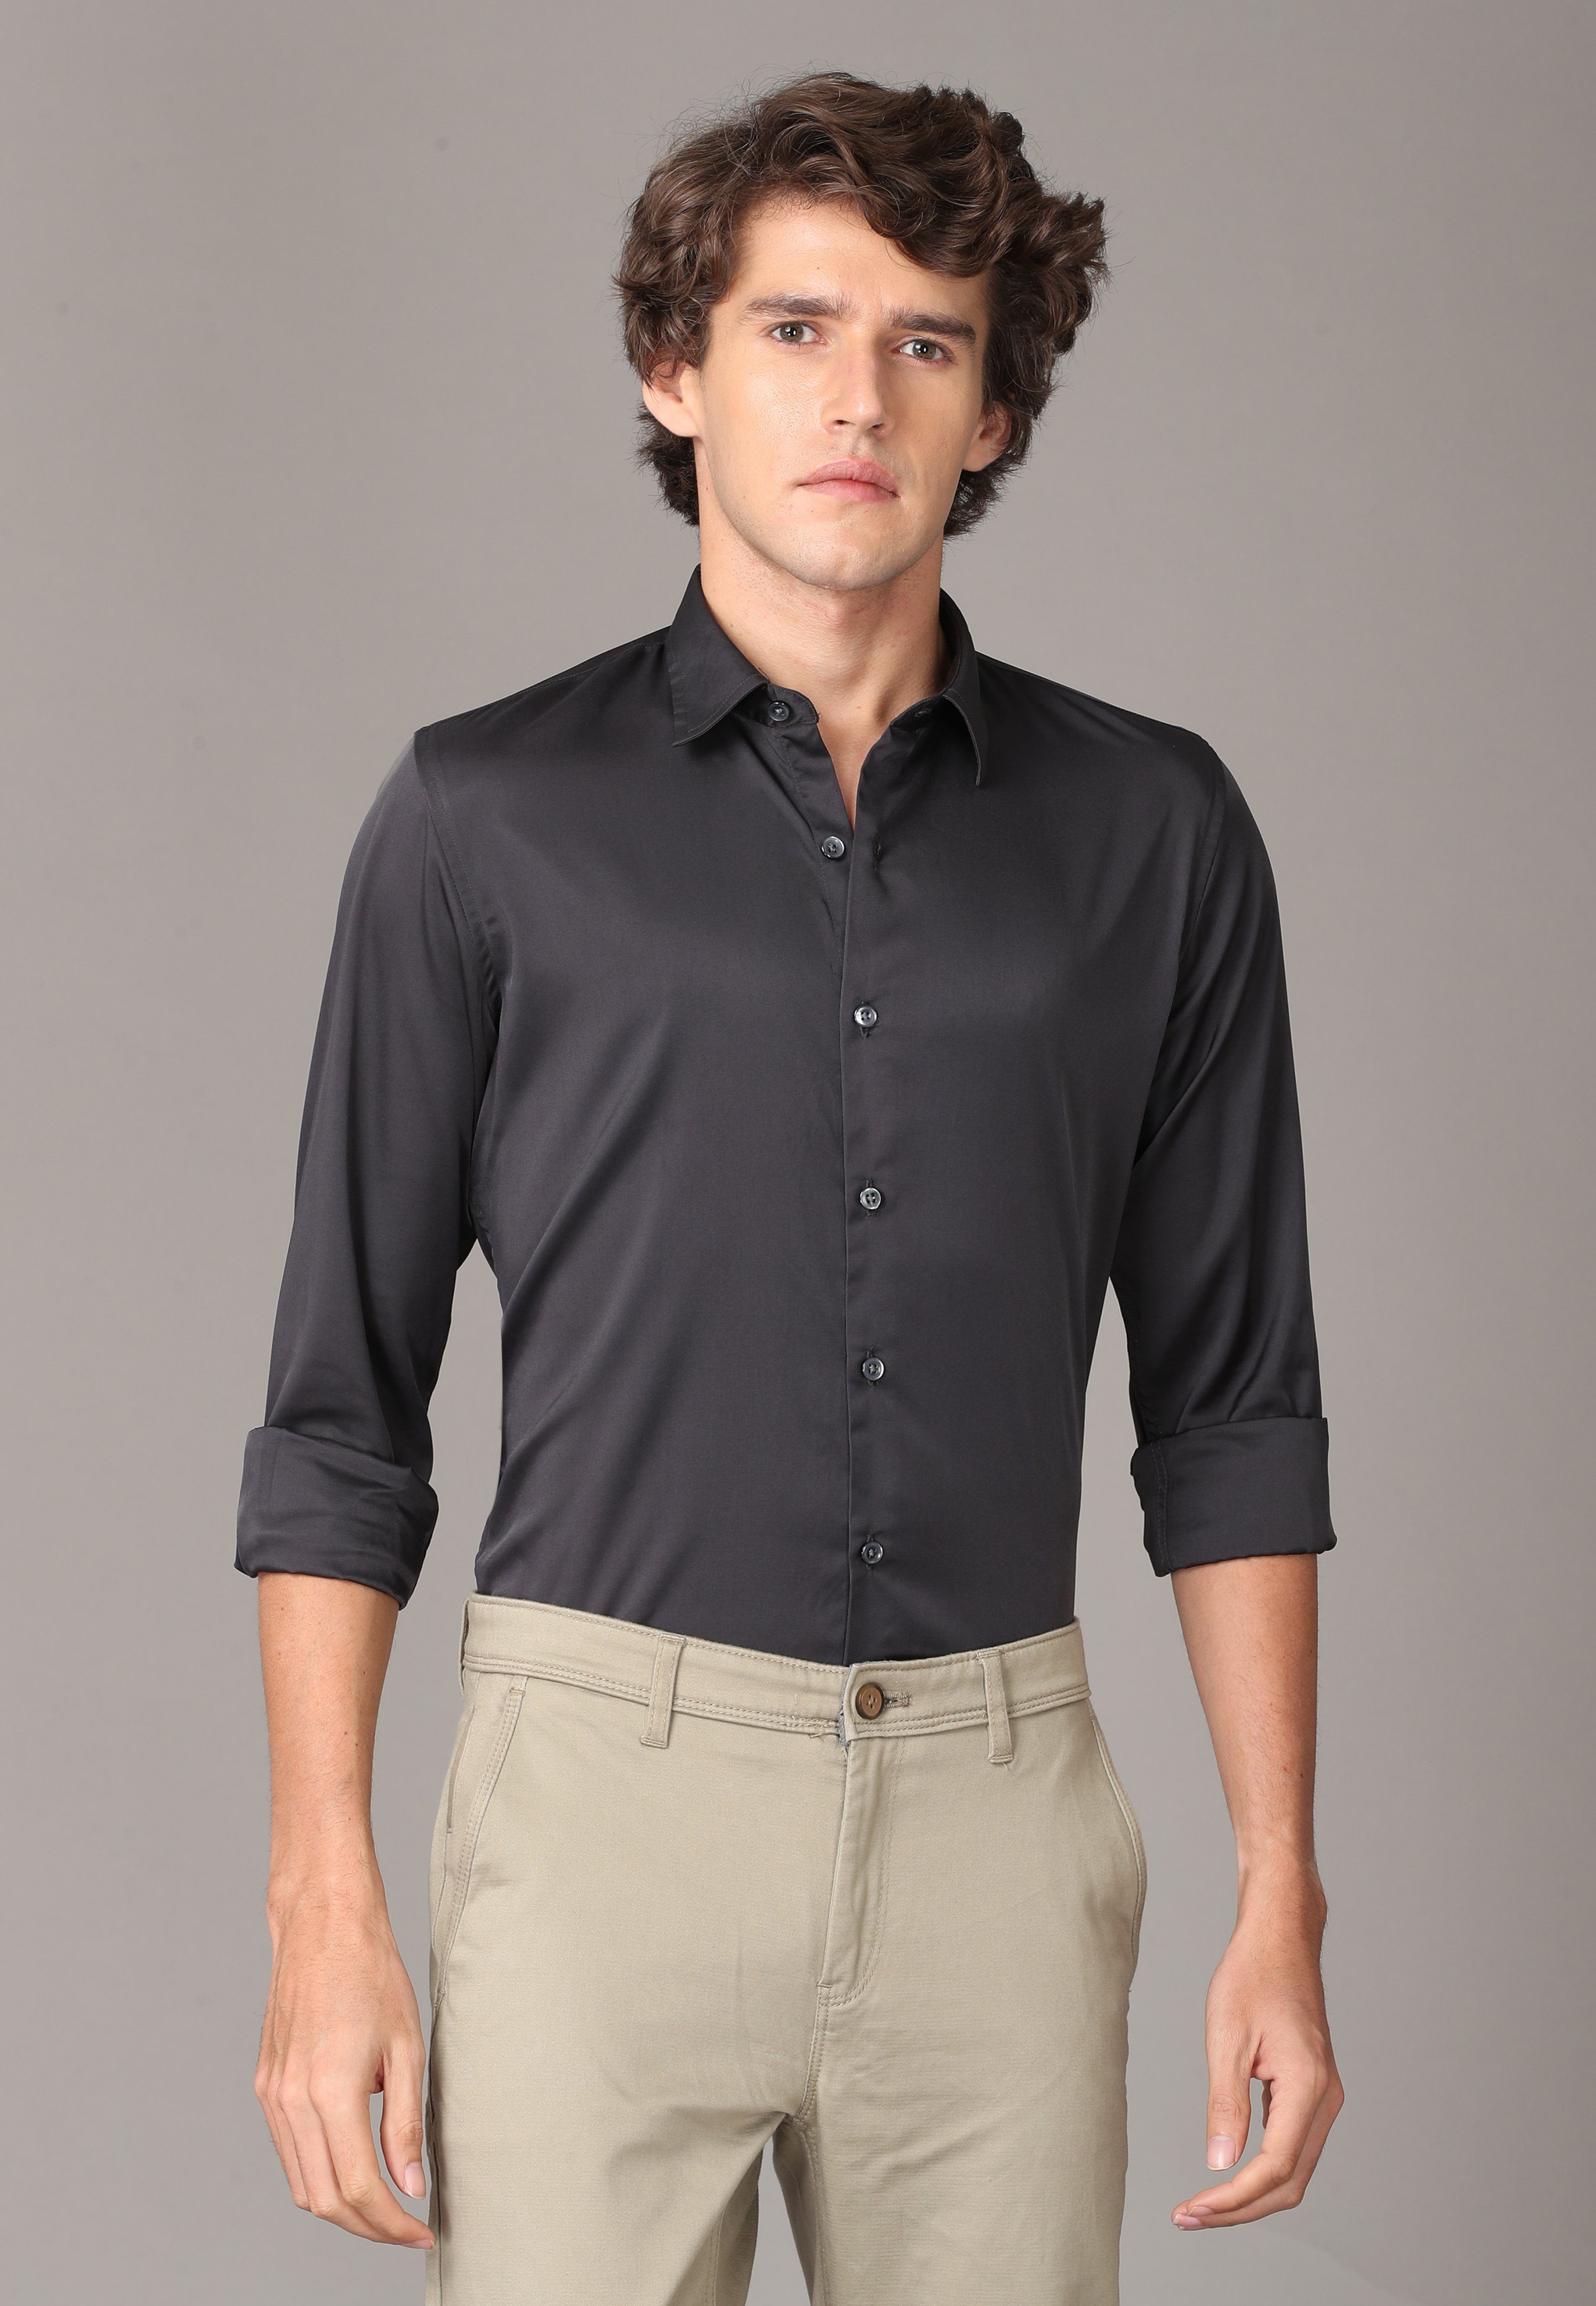 Glossy Black Full Sleeve Shirt Shirts KEF 